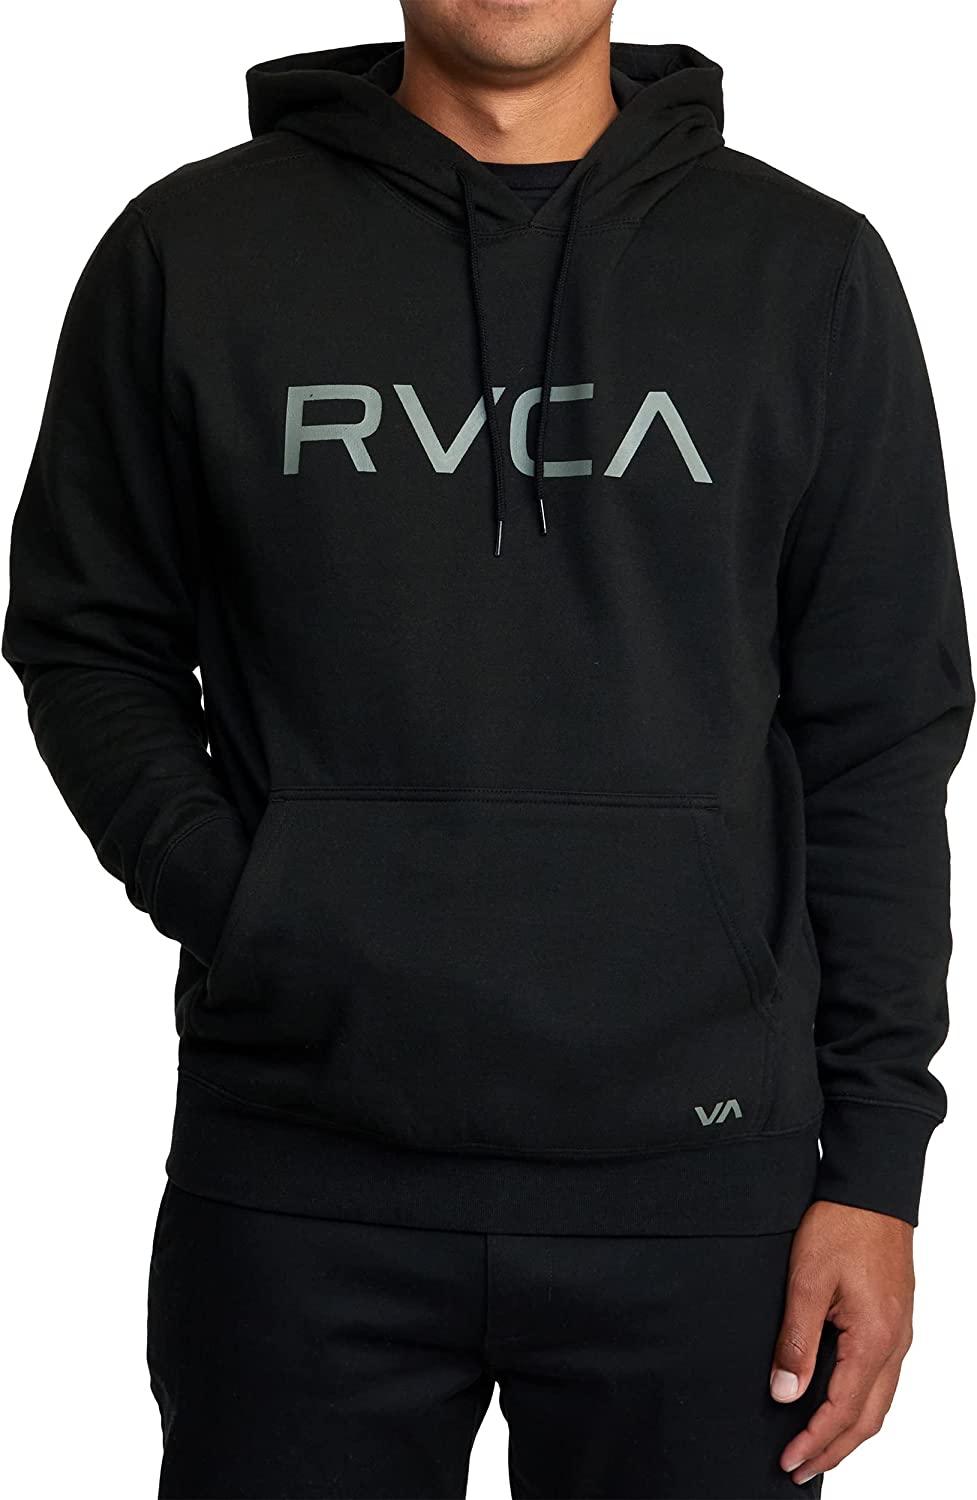 RVCA Sweatshirts, Hoodies & Fleece